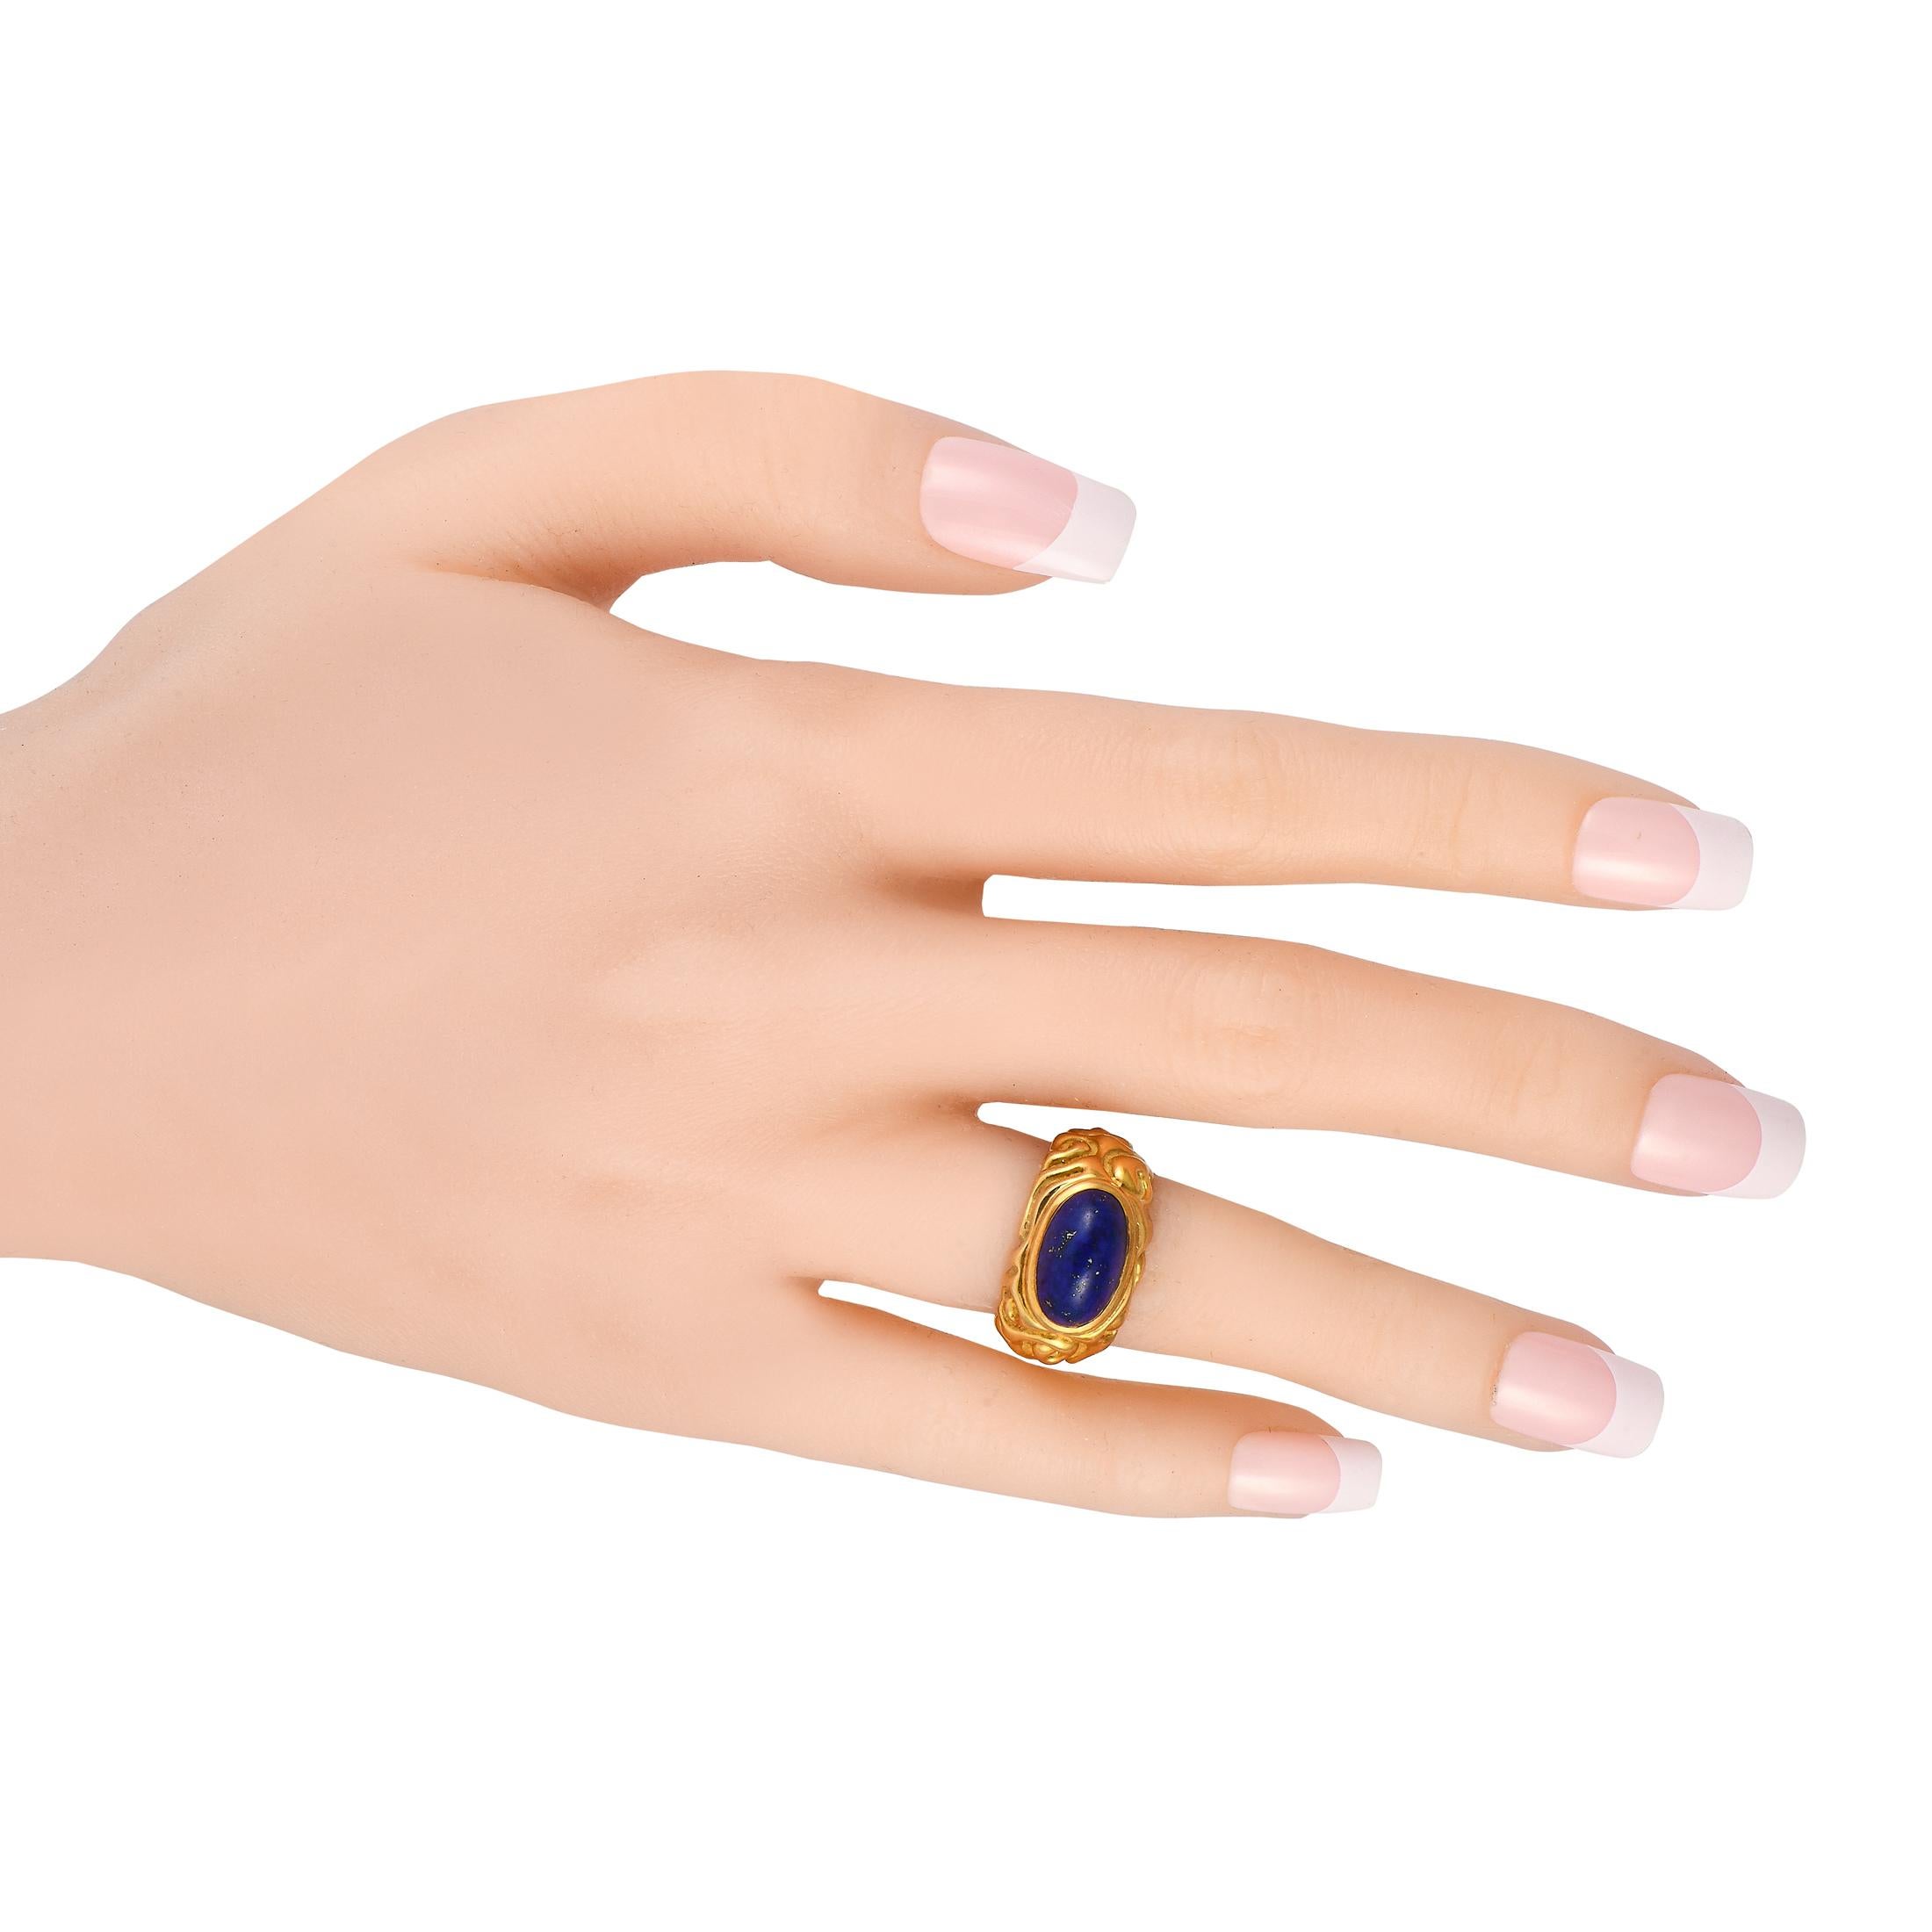 Oval Cut Elizabeth Gage 18K Yellow Gold Lapis Lazuli Carved Ring